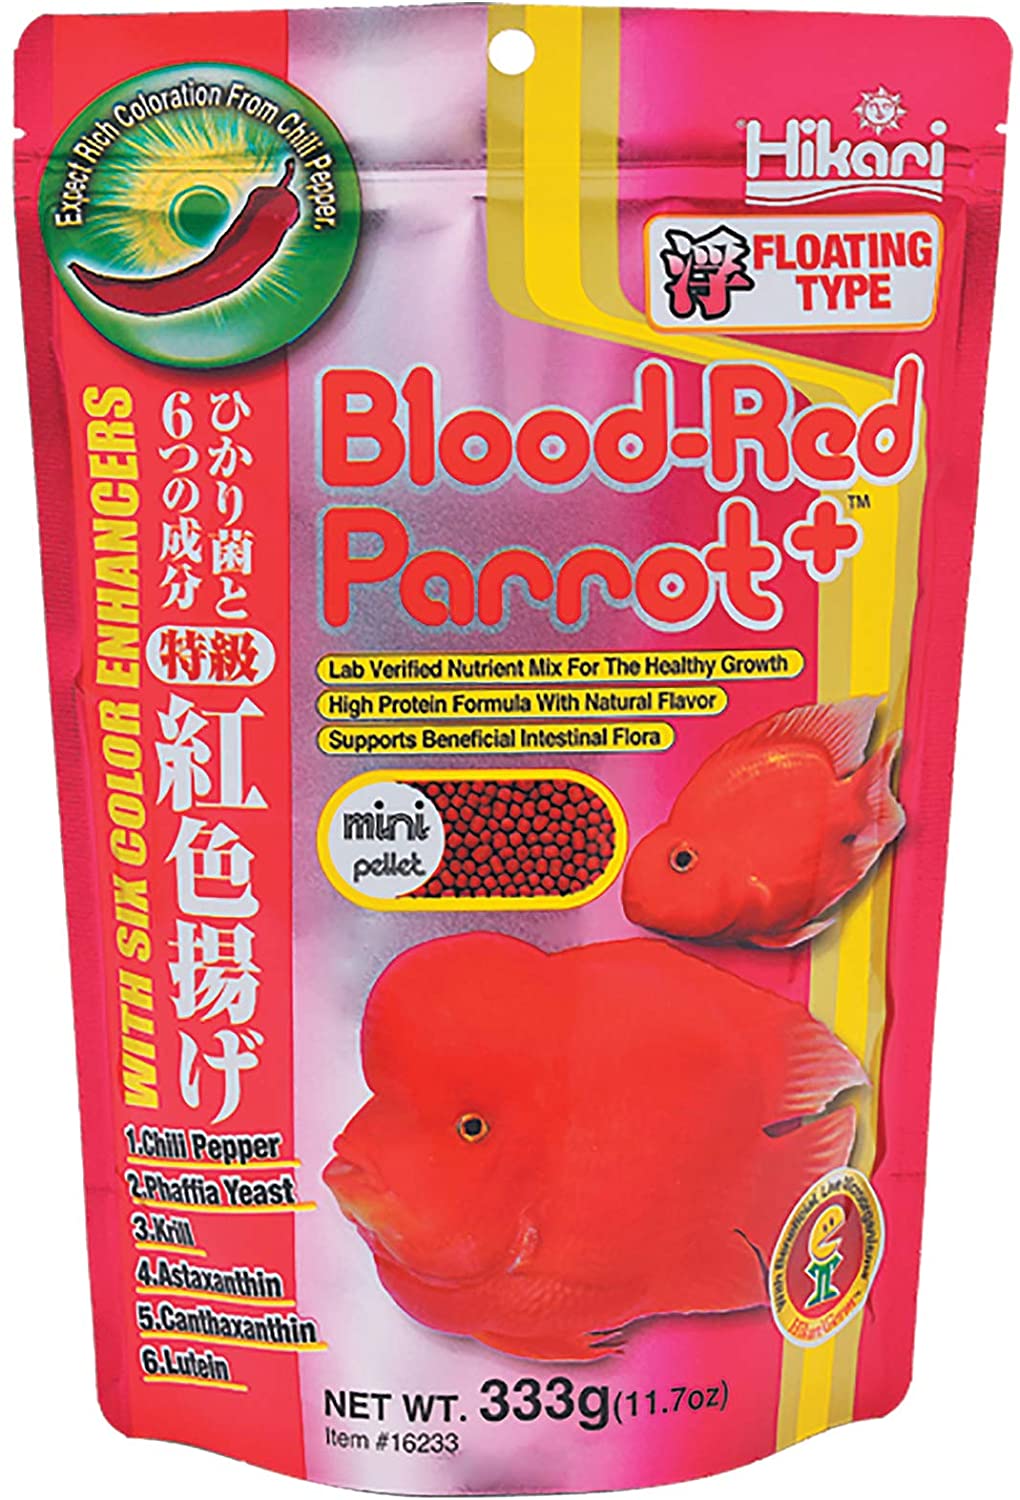 Hikari Blood-Red Parrot+